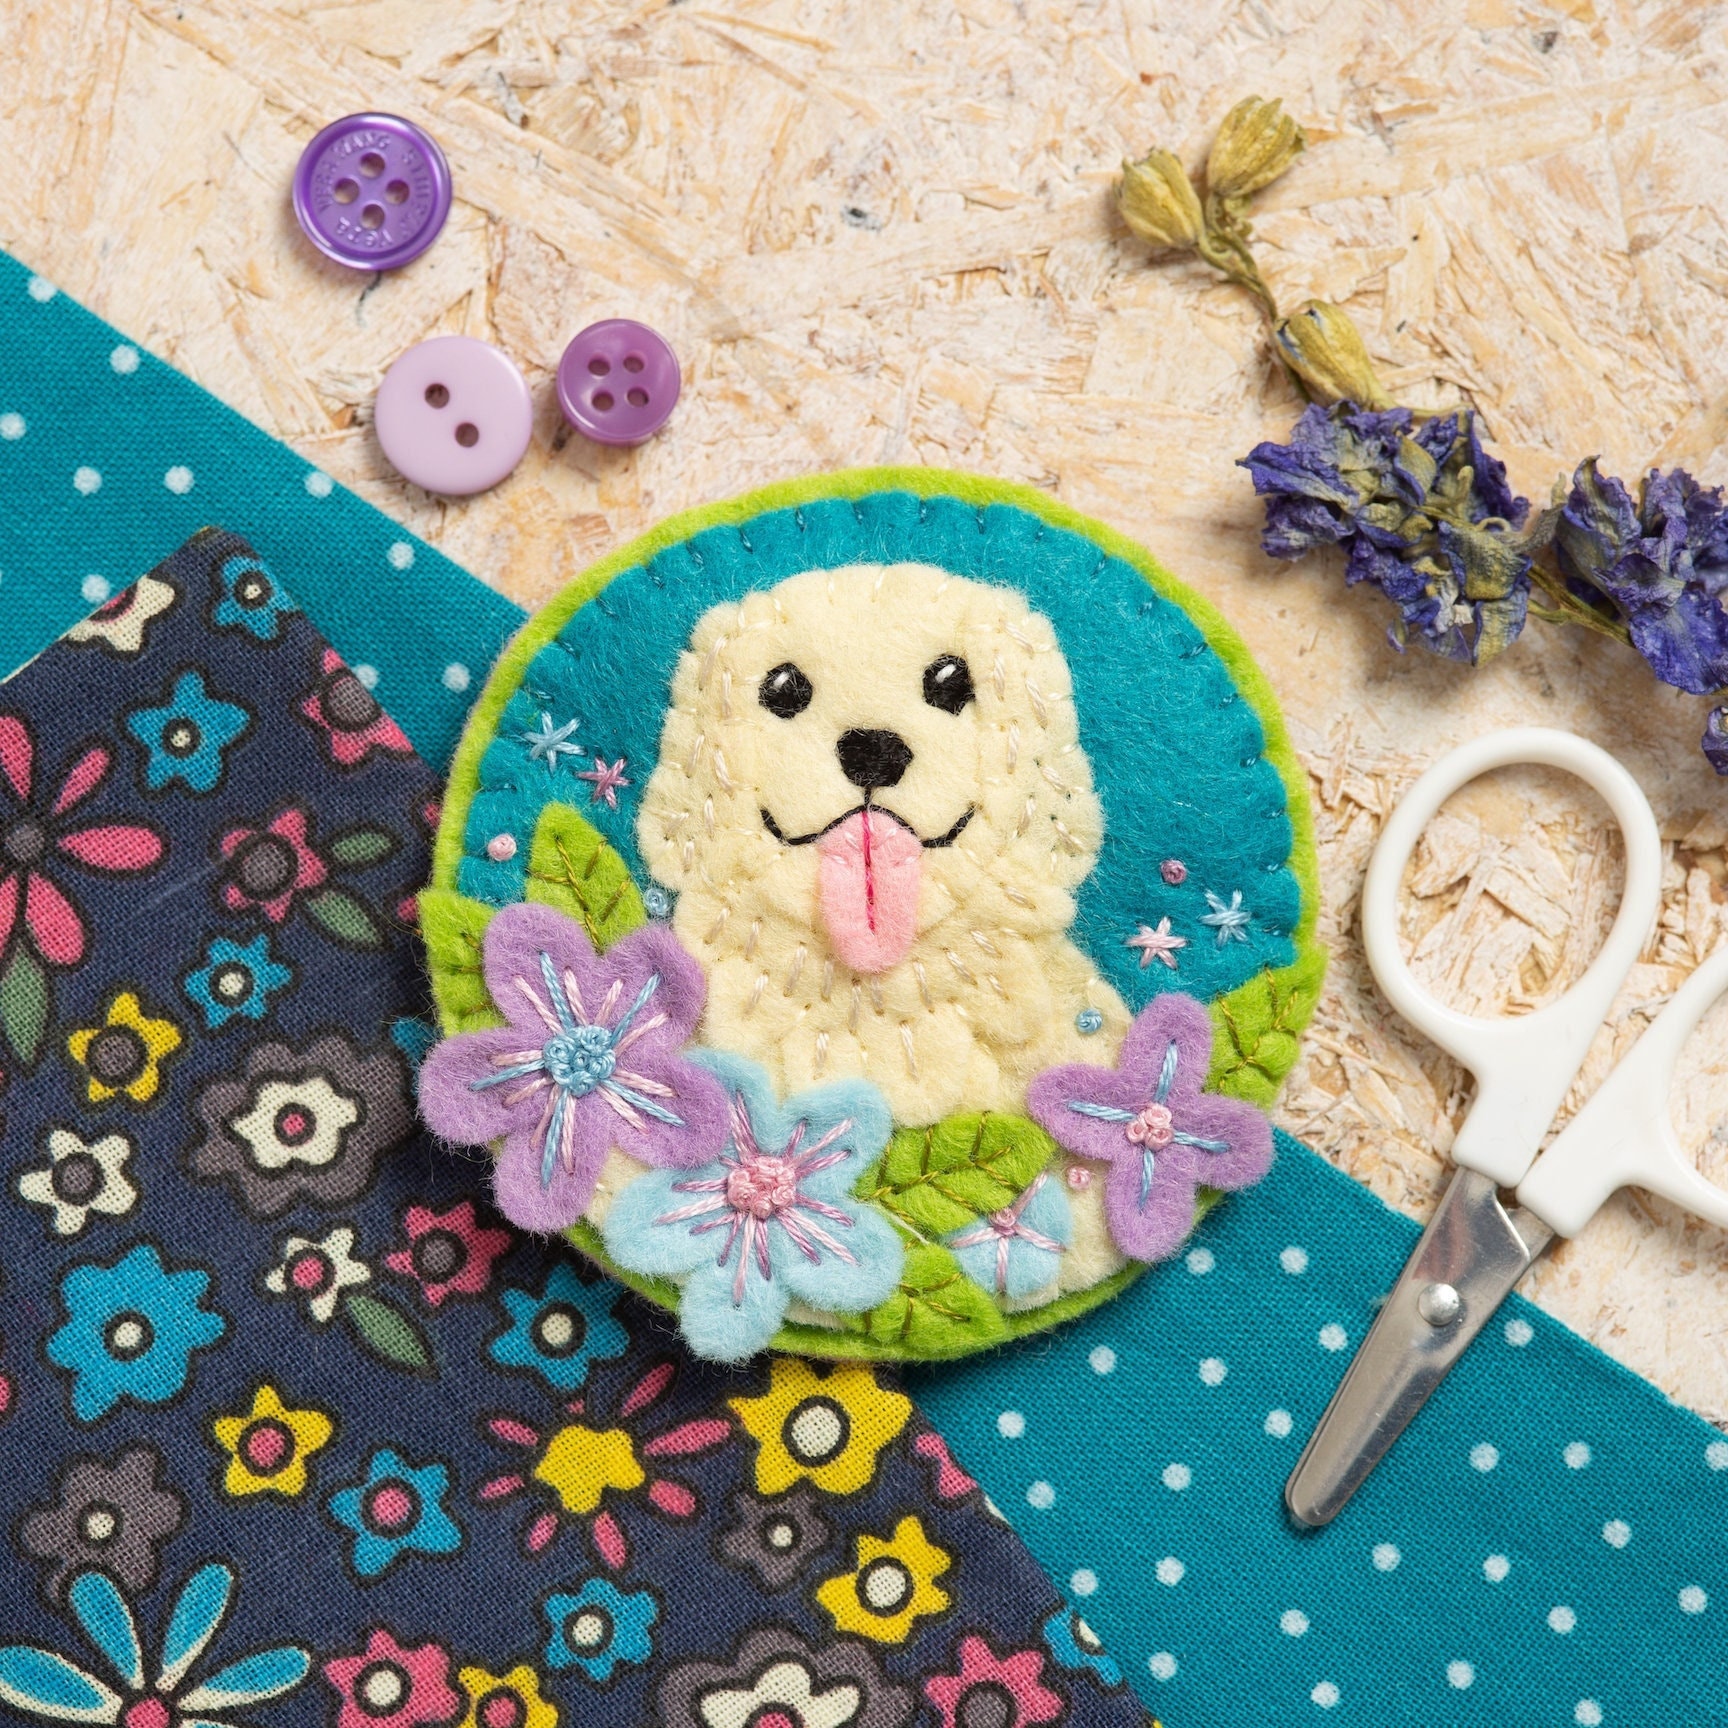 Slow Stitch Kit for Adults, Dog Craft, Mindfulness Gifts, Craft